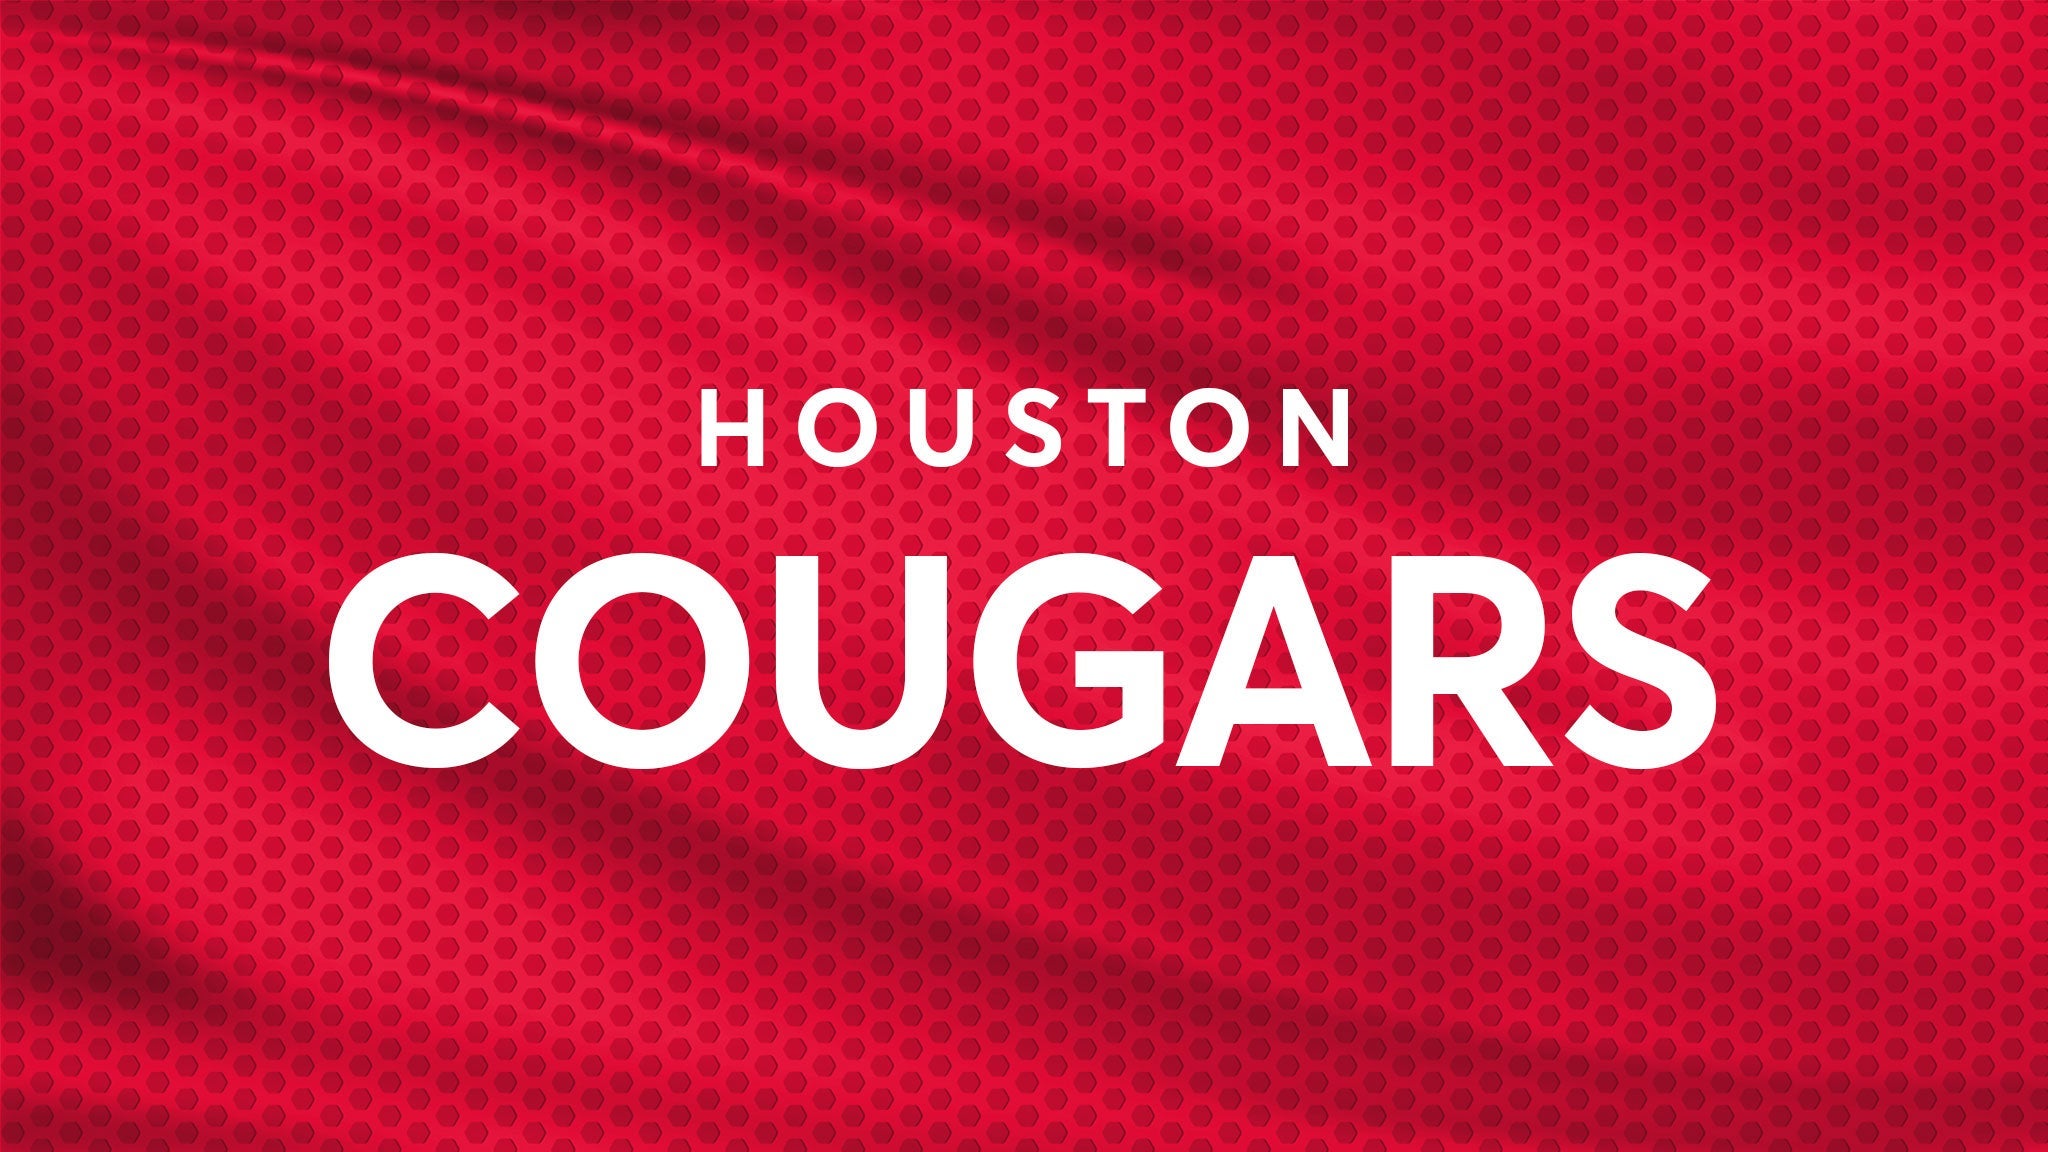 Houston Cougars Football vs. UNLV Rebels Football hero